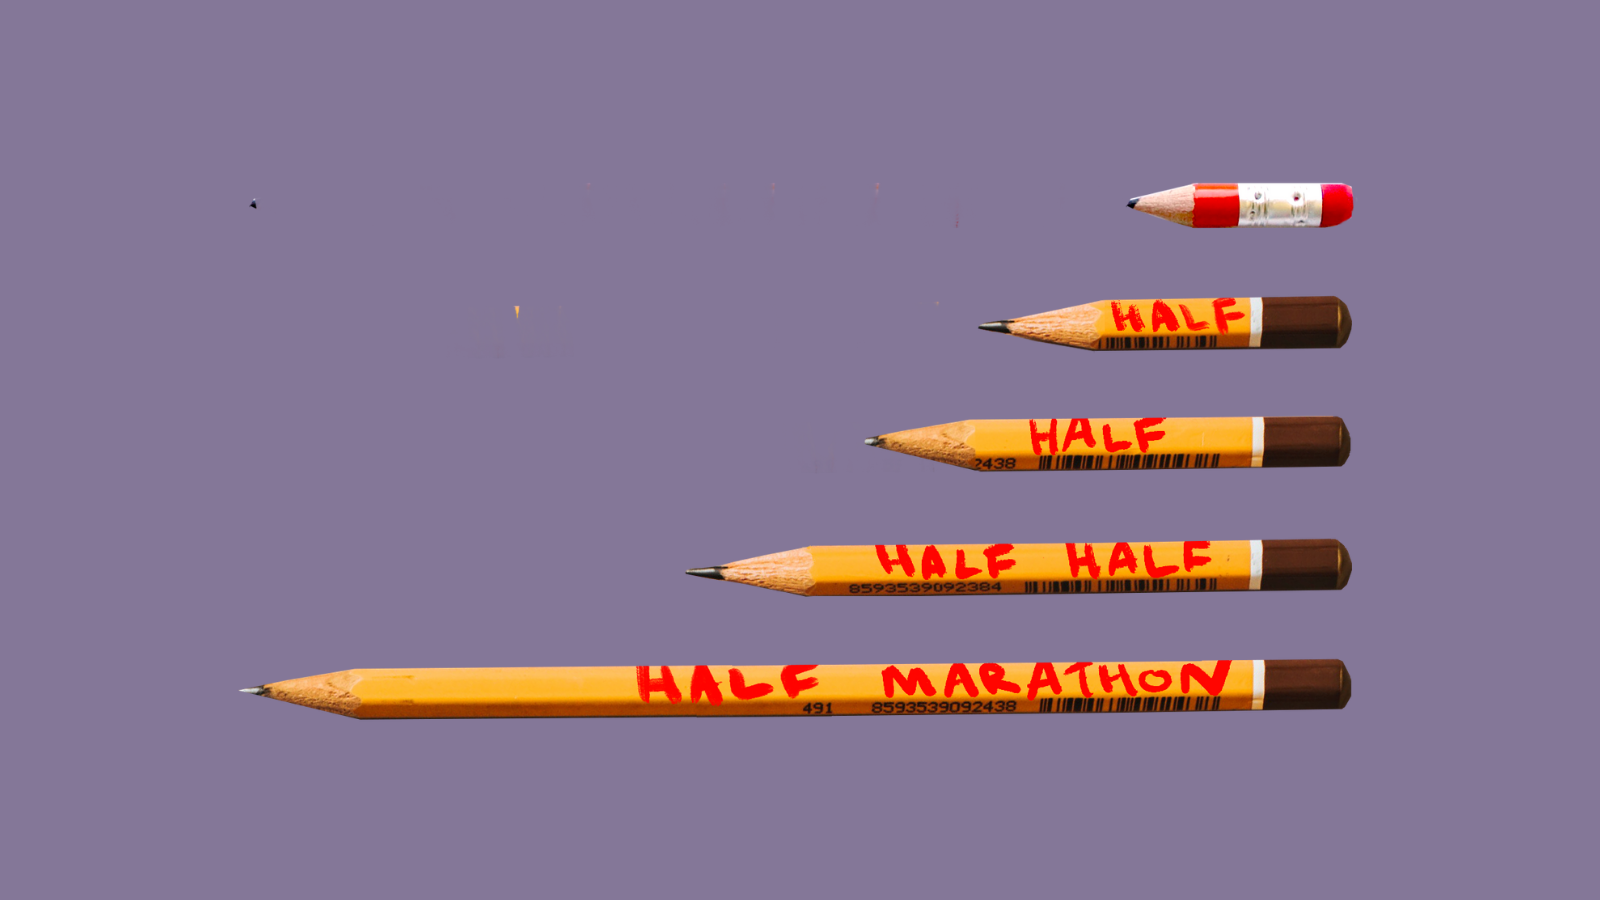 Pencils with "Half-Half-Half-Half-Half Marathon" written on them